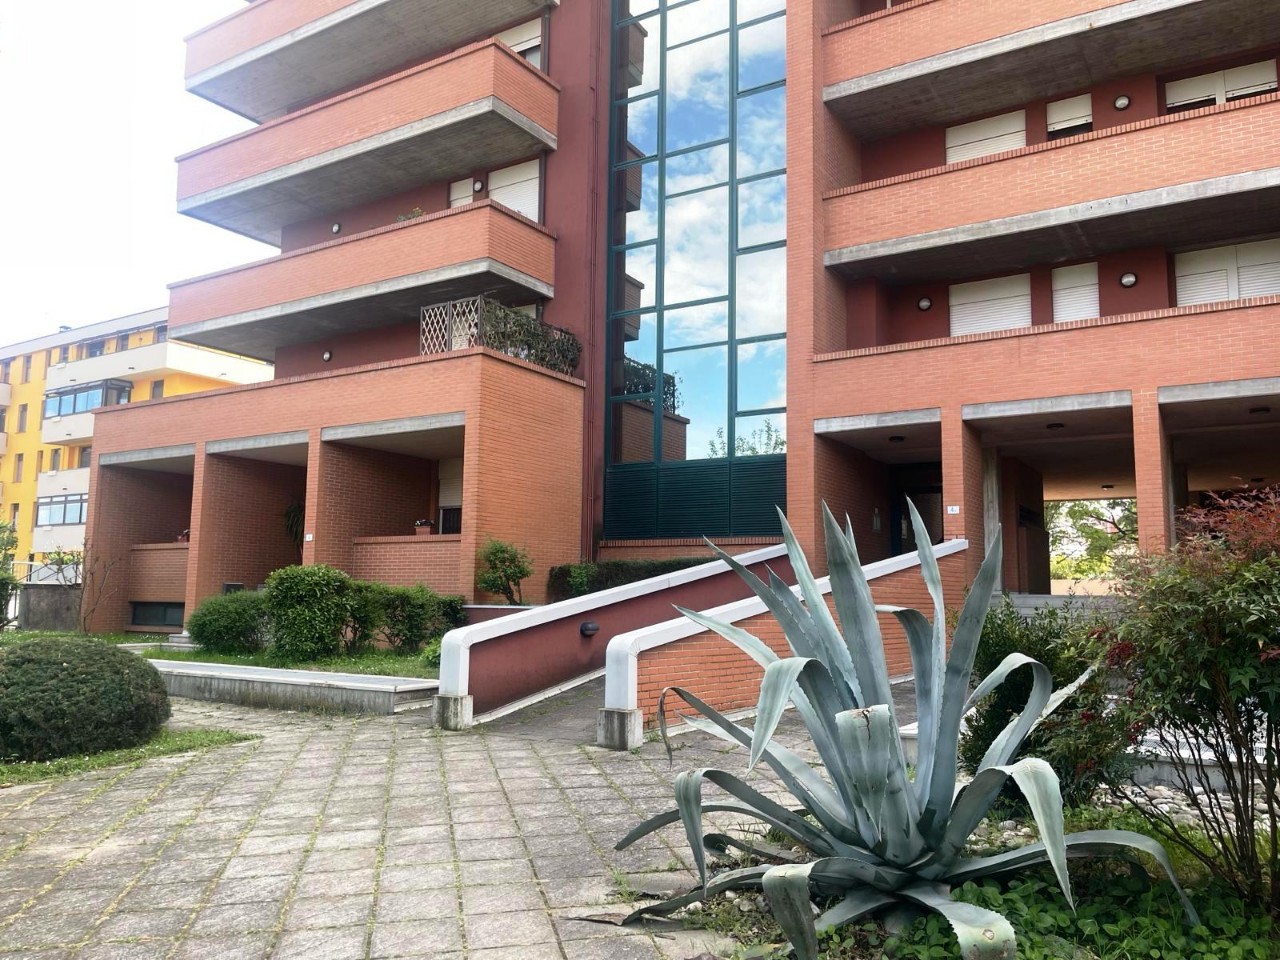 Vendita - Appartamento - Imola - Imola - € 270.000